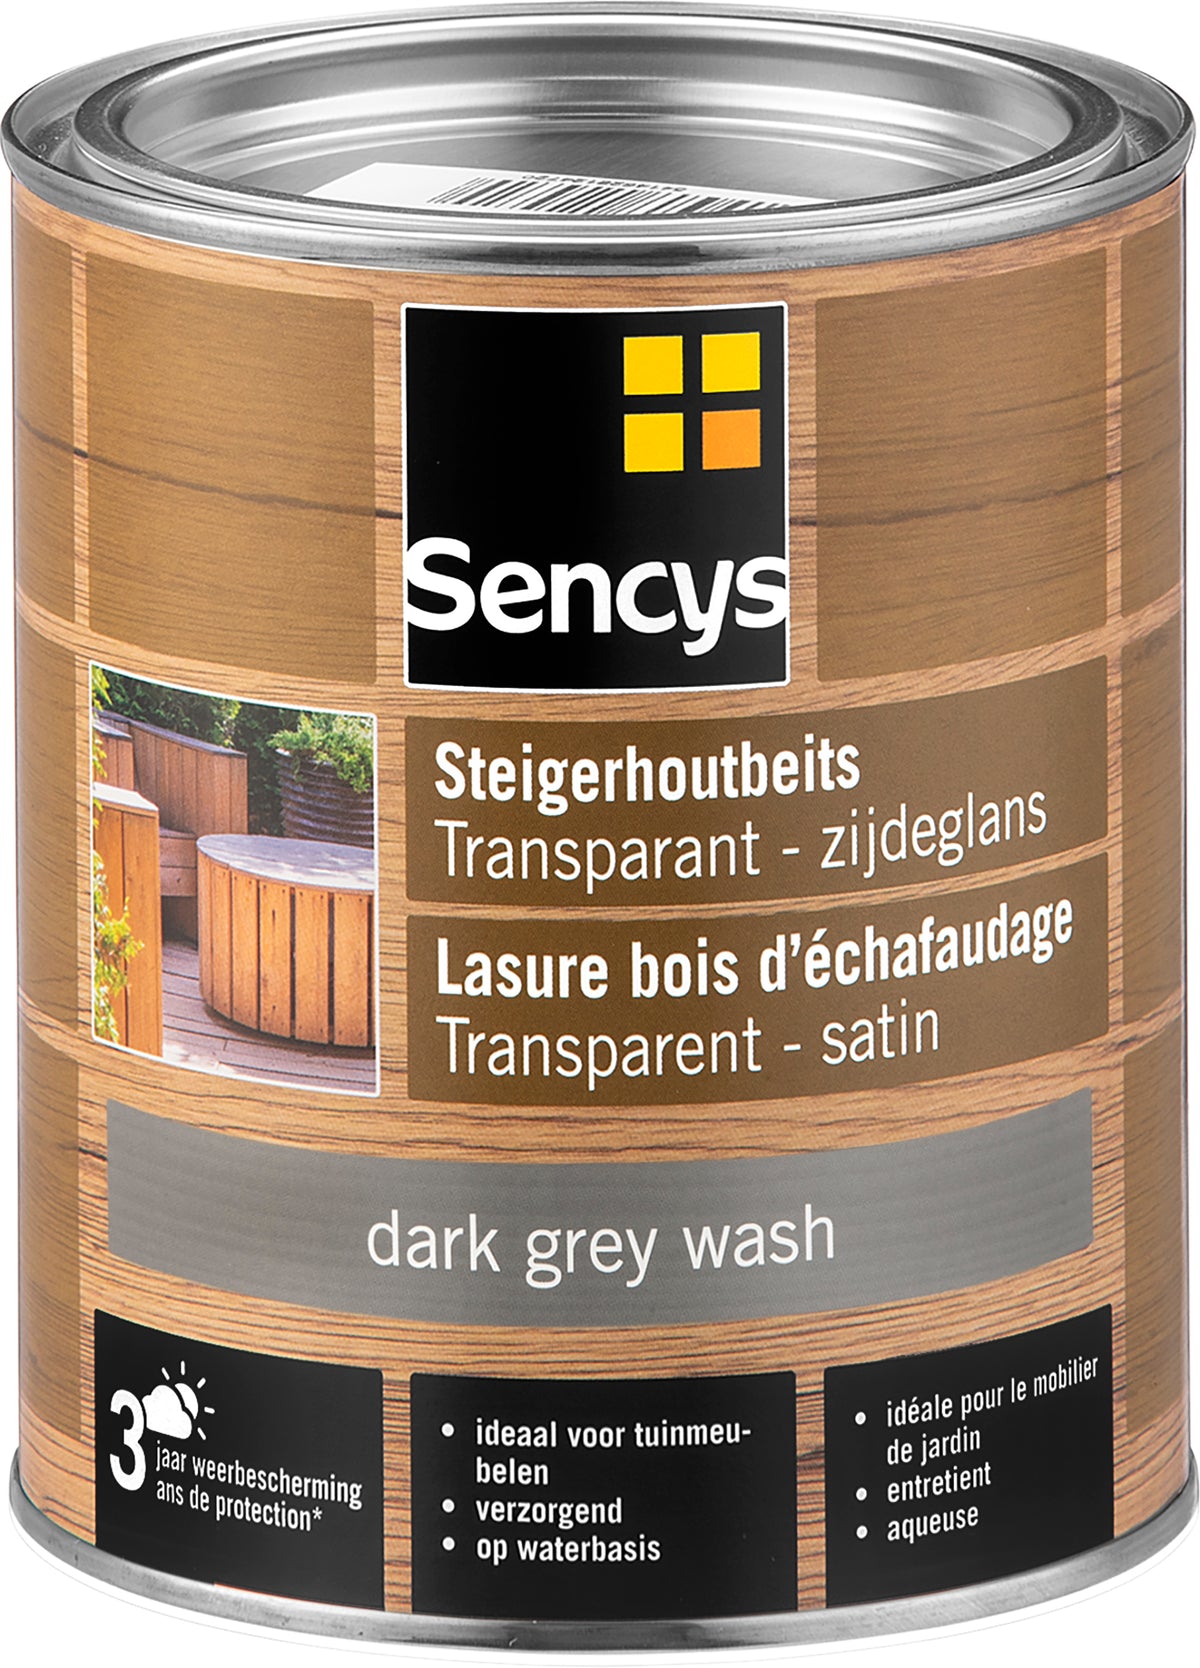 Sencys steigerhoutbeits transparant dark grey wash 750ml